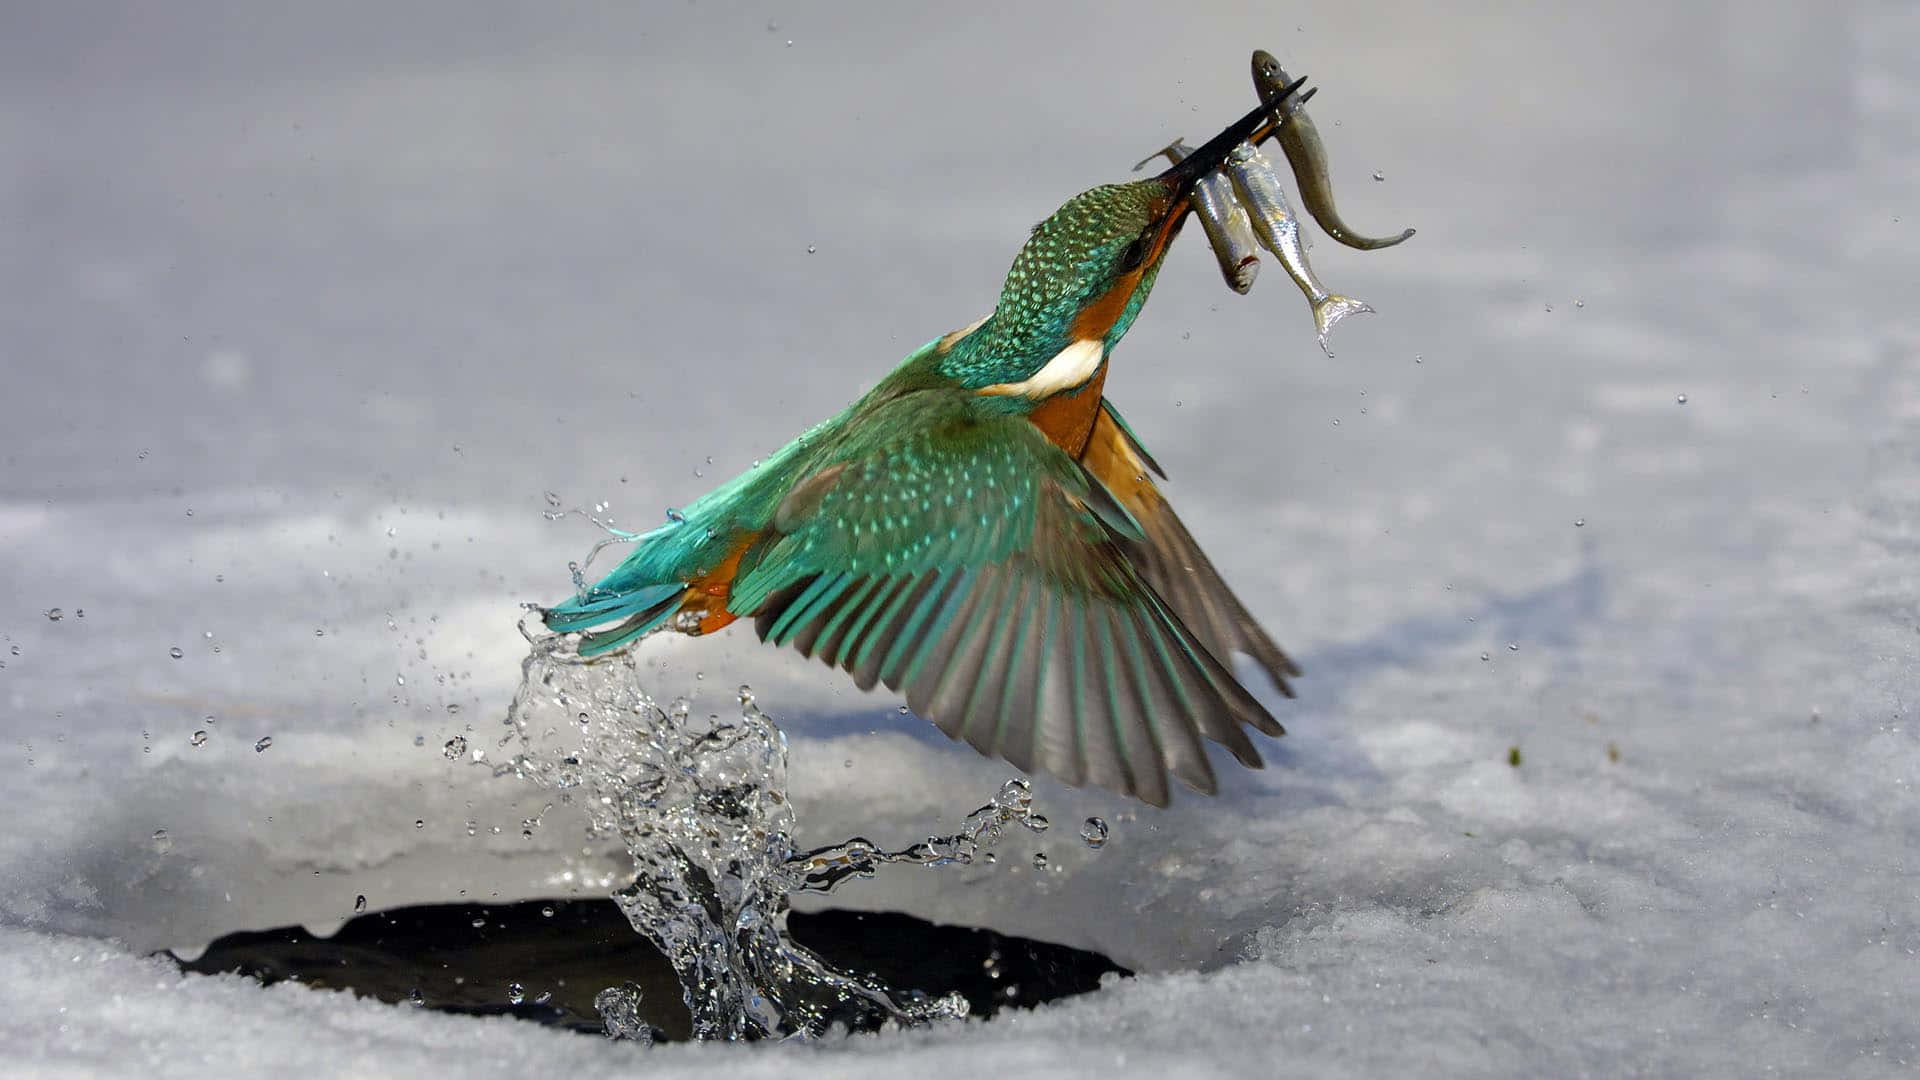 Kingfisher Catching Fish In Winter Wallpaper